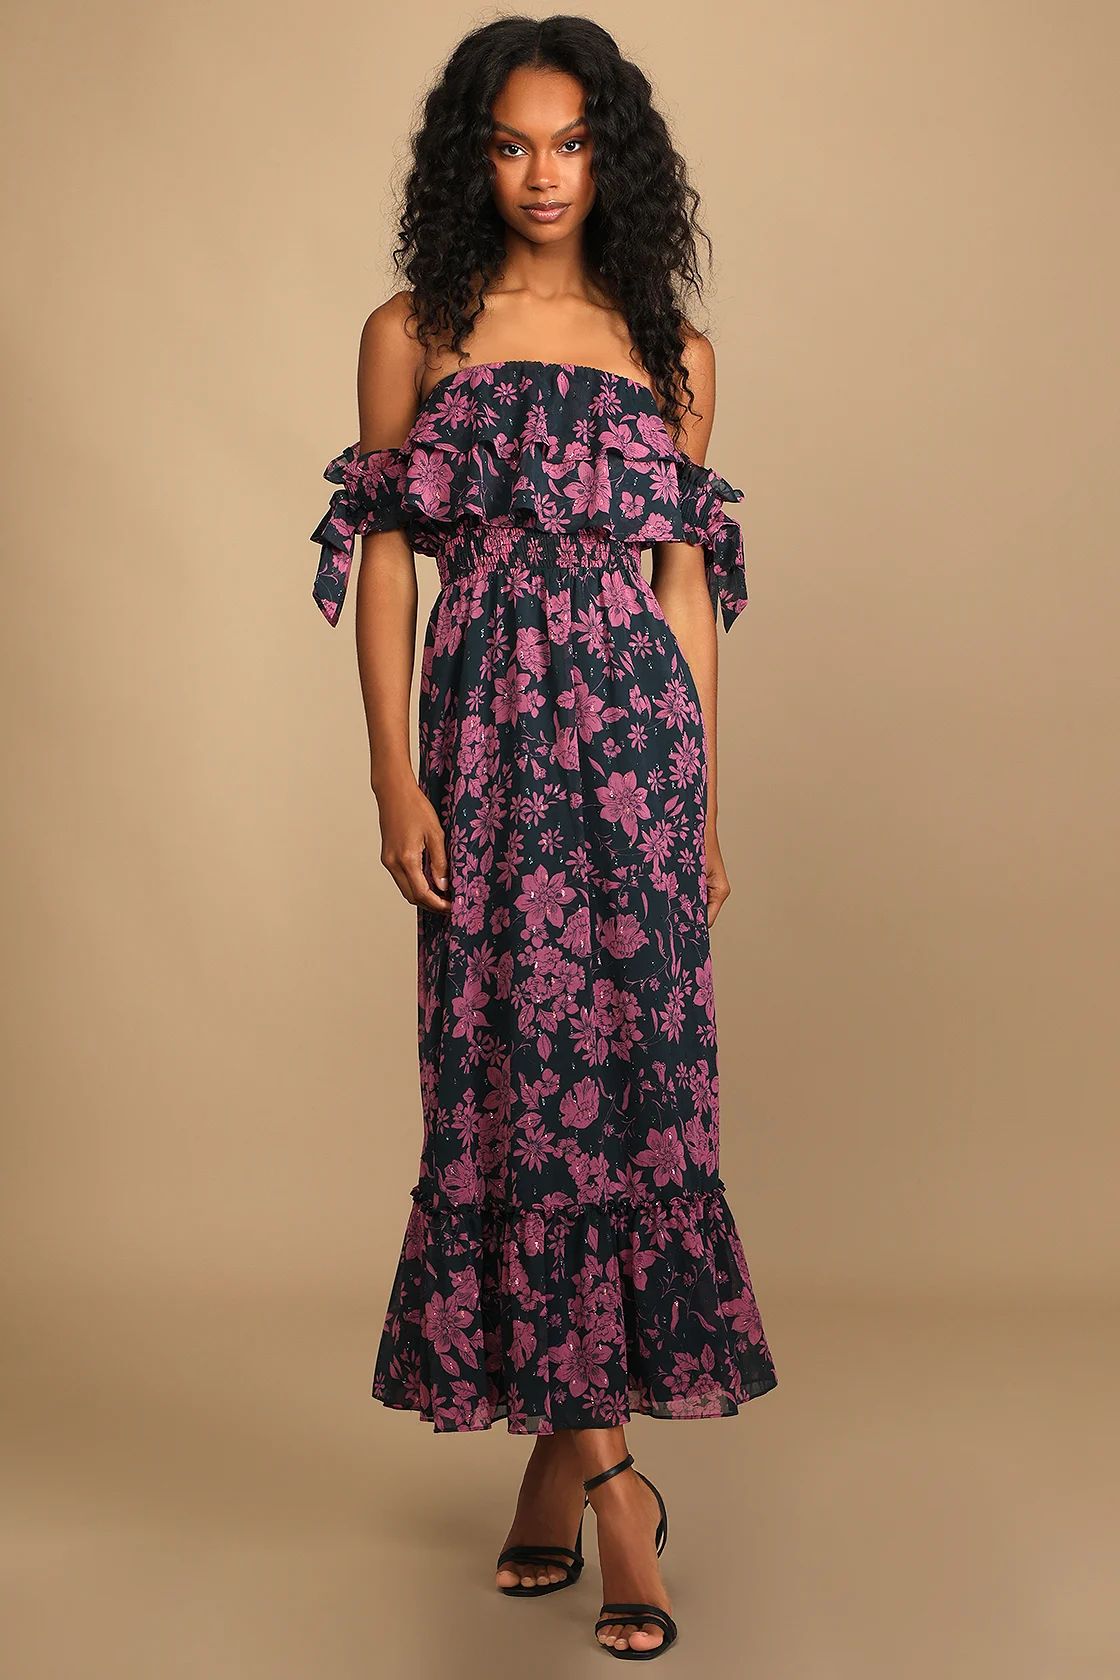 Love and Blooms Navy Blue Floral Print Off-the-Shoulder Dress | Lulus (US)